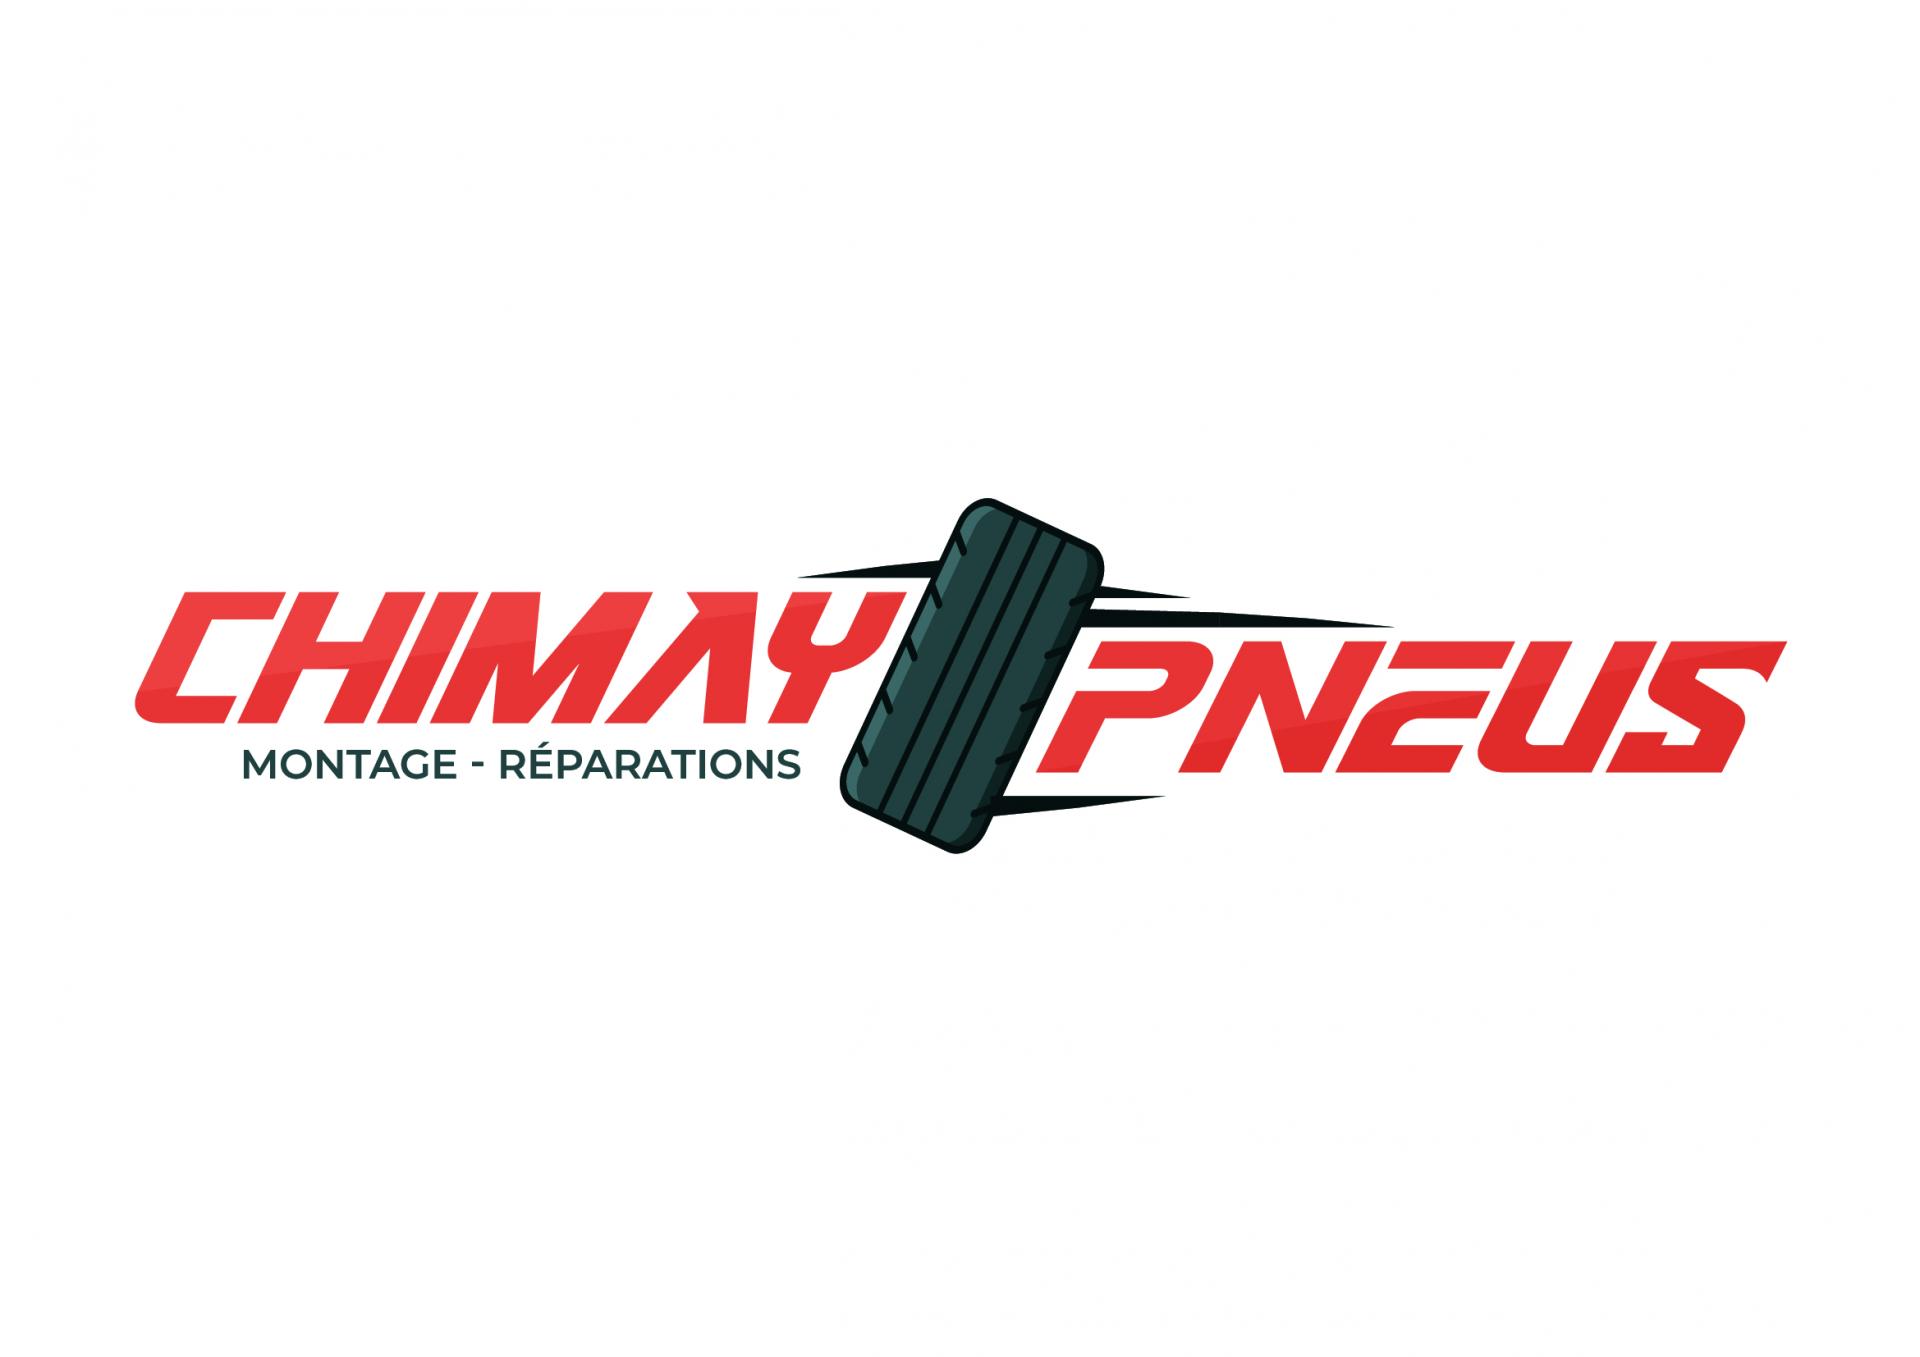 Chimay pneus logo couleurs print 9